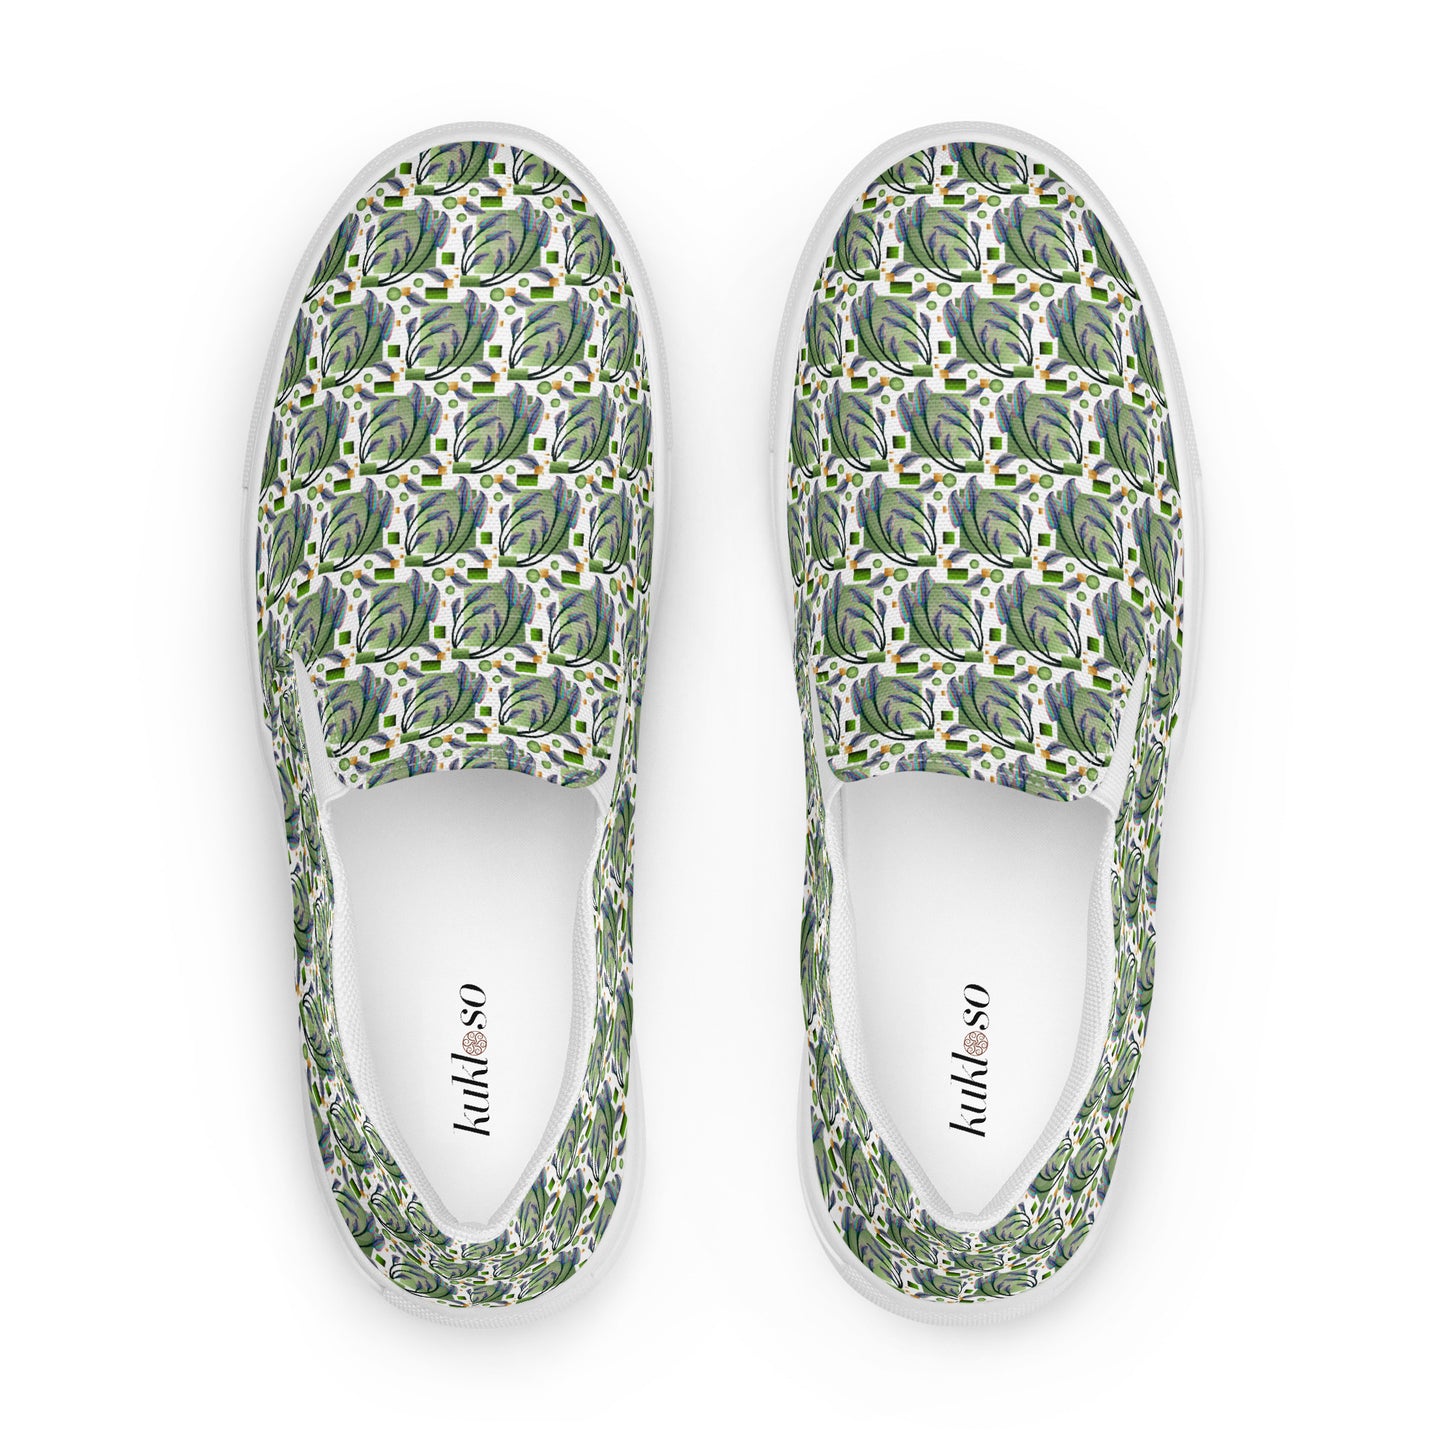 Women’s slip-on canvas shoes Kukloso Melange de fleur No 46 Green on White - Free Shipping